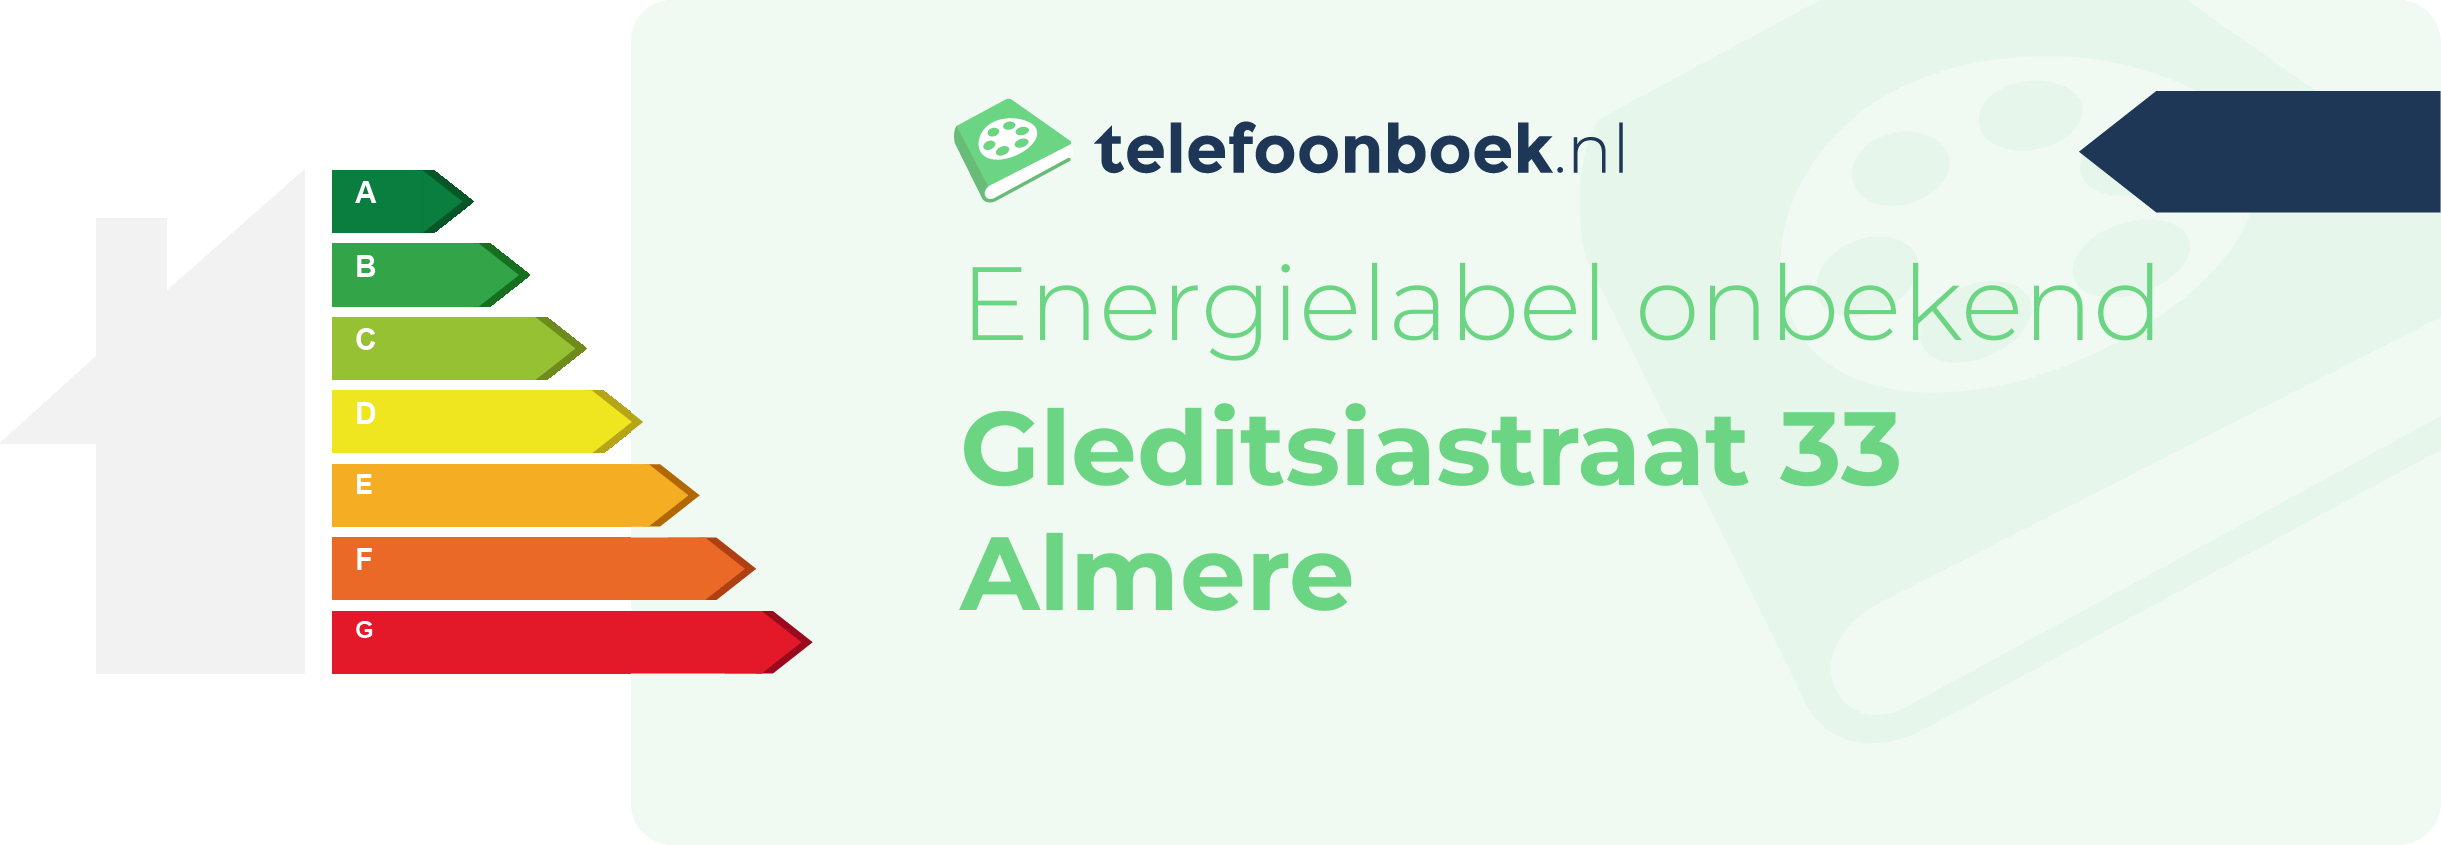 Energielabel Gleditsiastraat 33 Almere